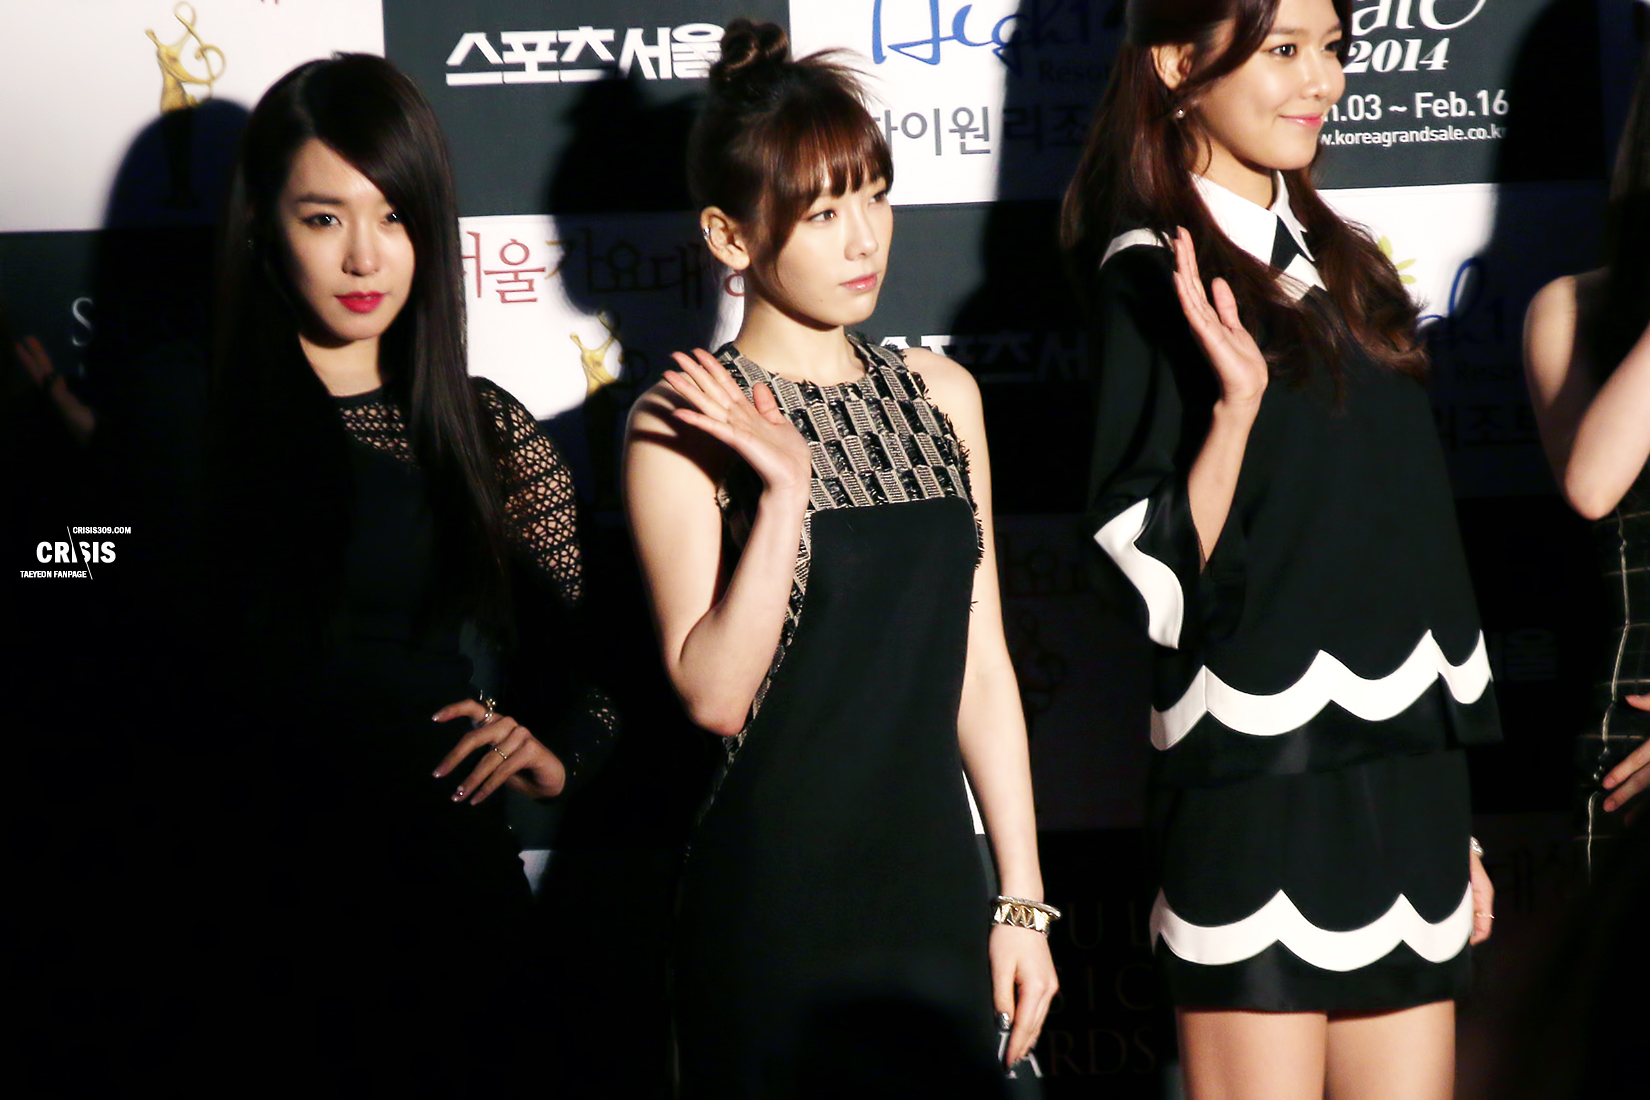 [PIC][23-01-2014]SNSD tham dự "23rd Seoul Music Awards" vào tối nay - Page 3 2134EB4352E146831AAB1A